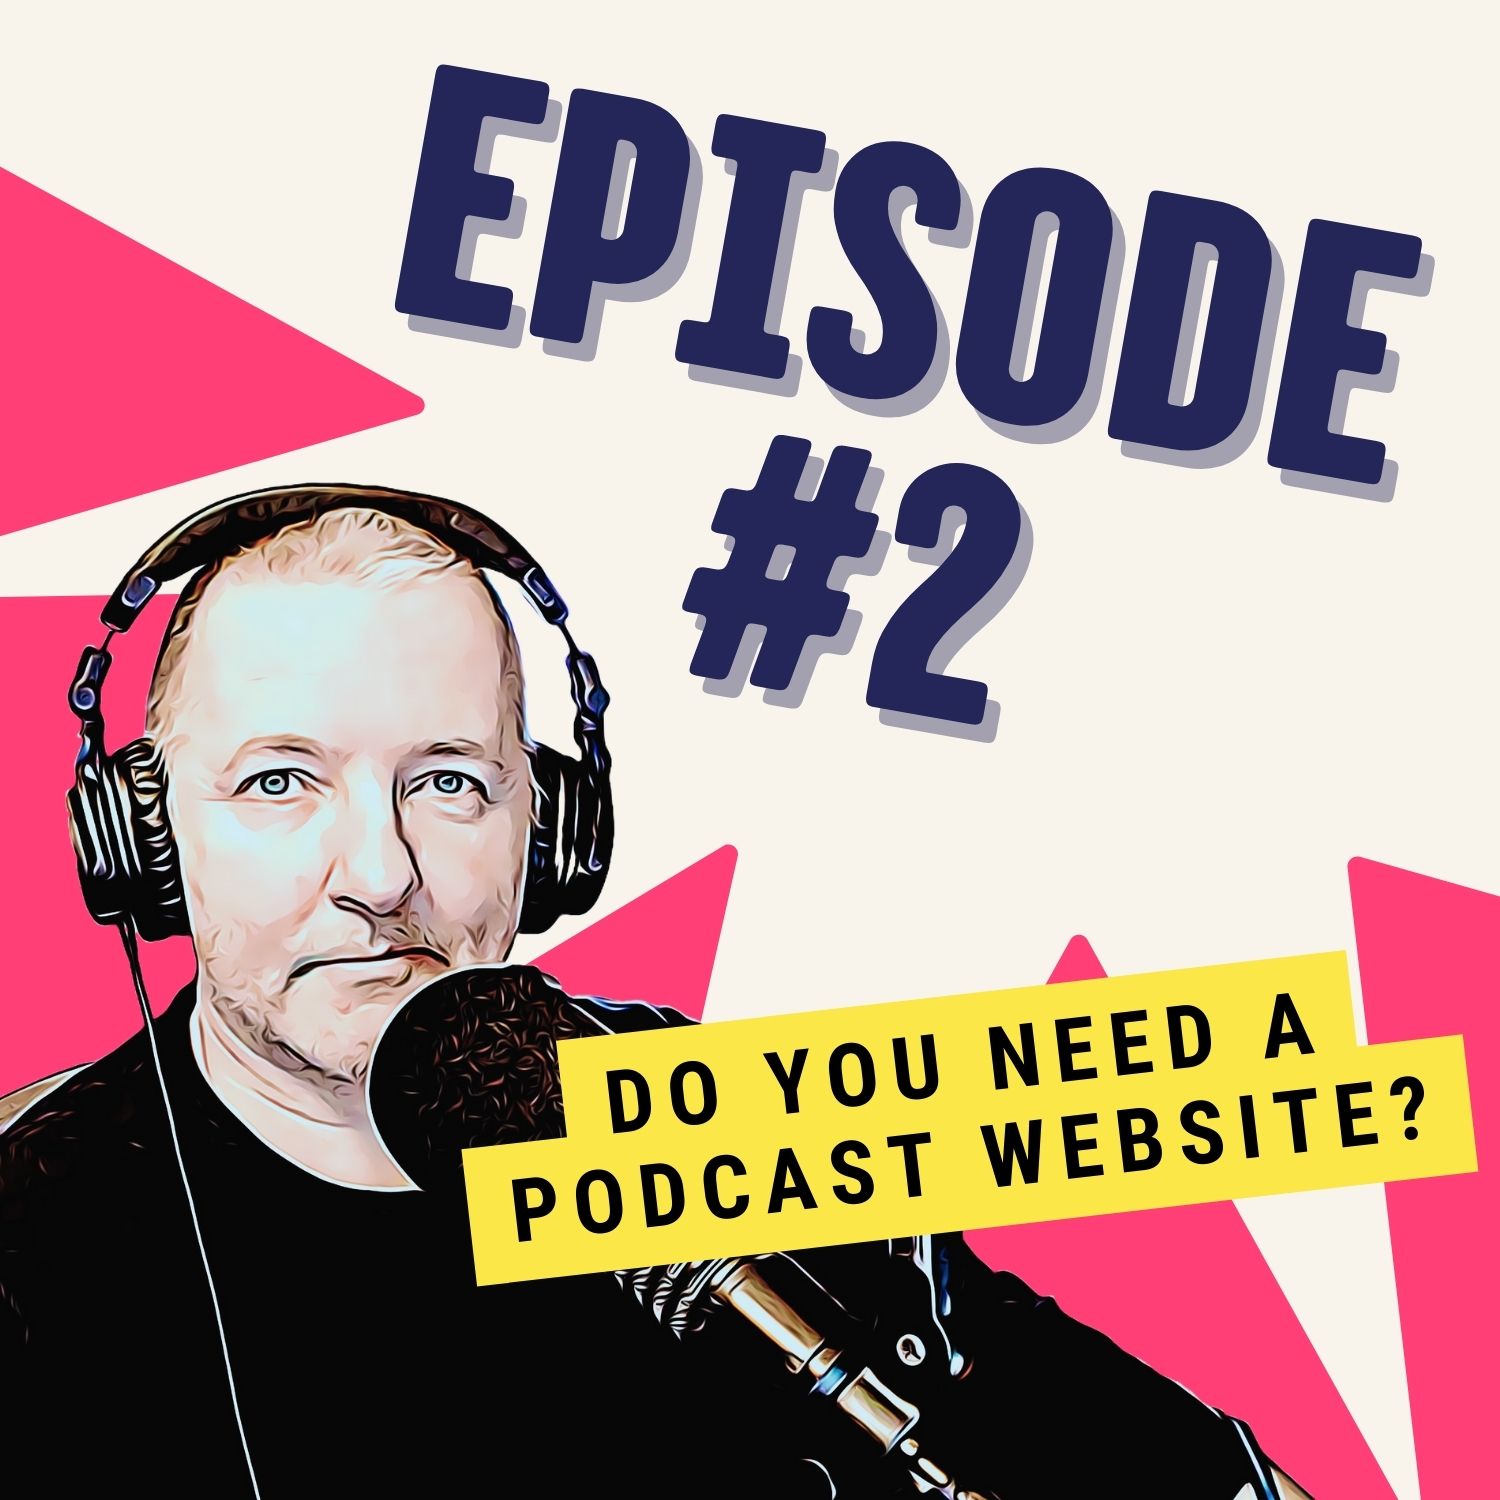 Do You Need a Podcast Website?